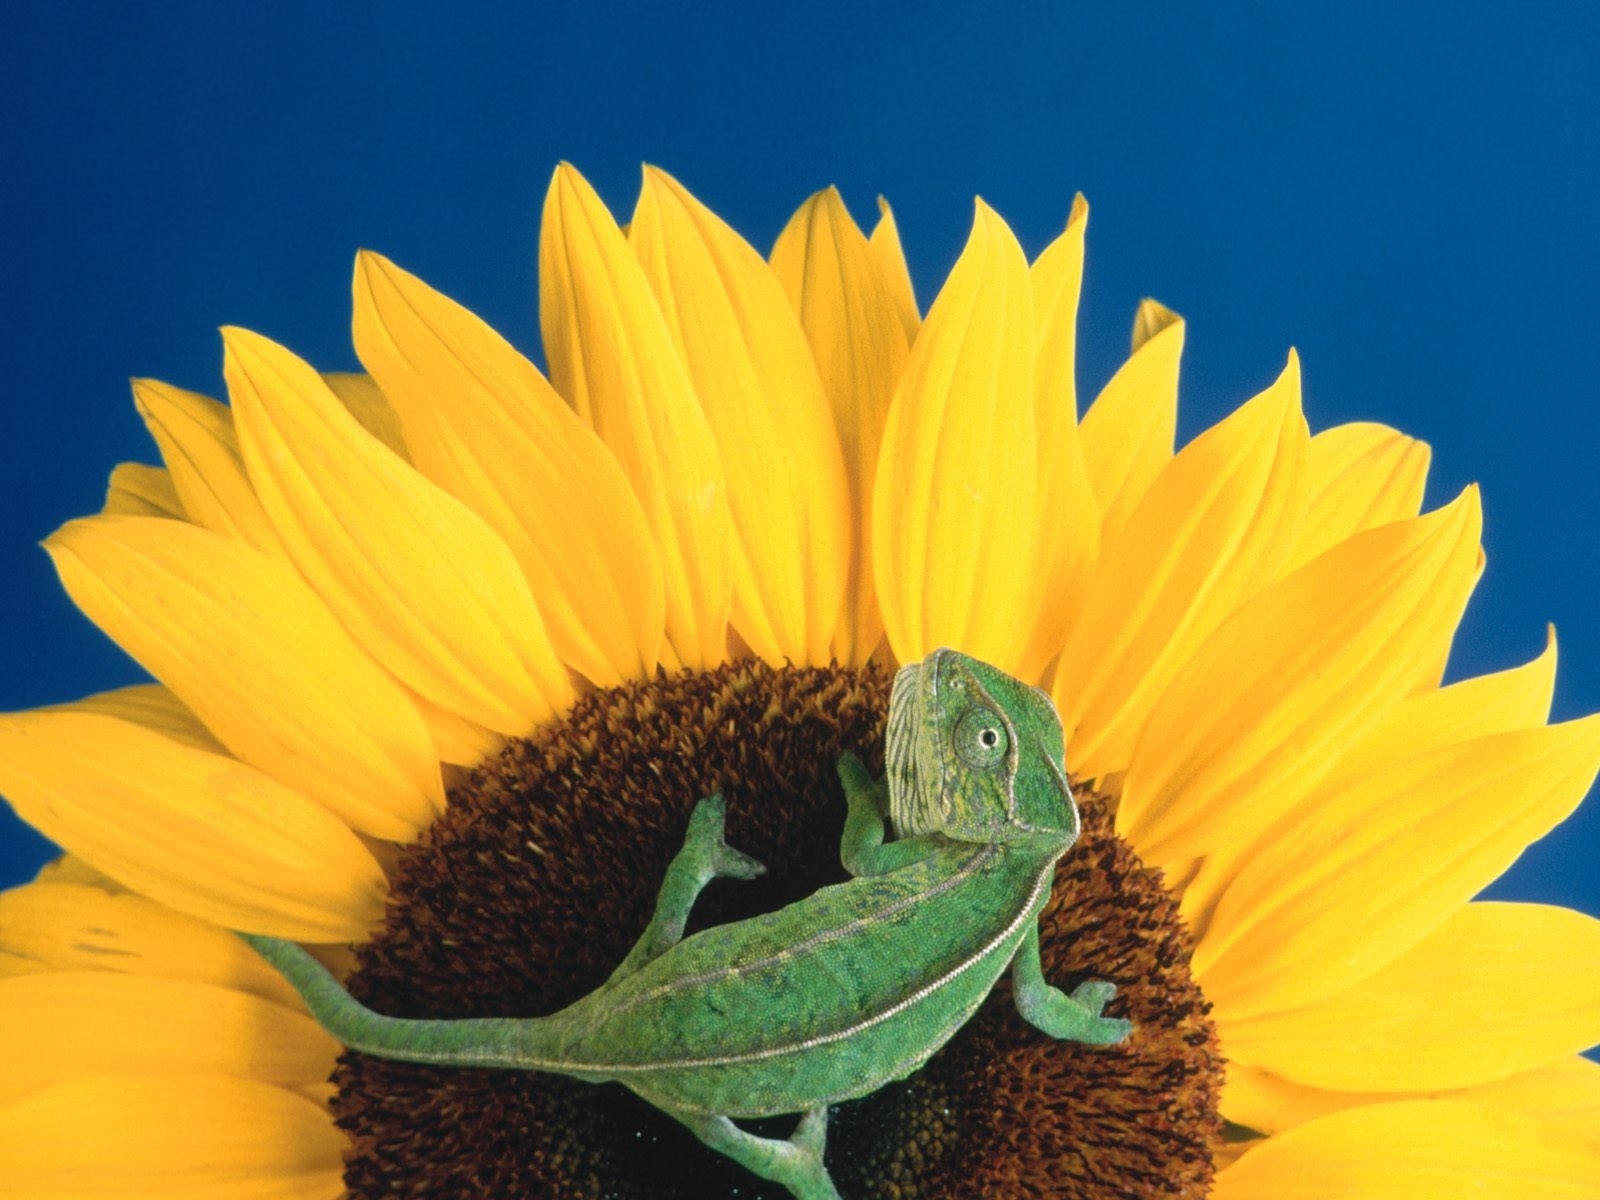 Popular Chameleons images for mobile phone